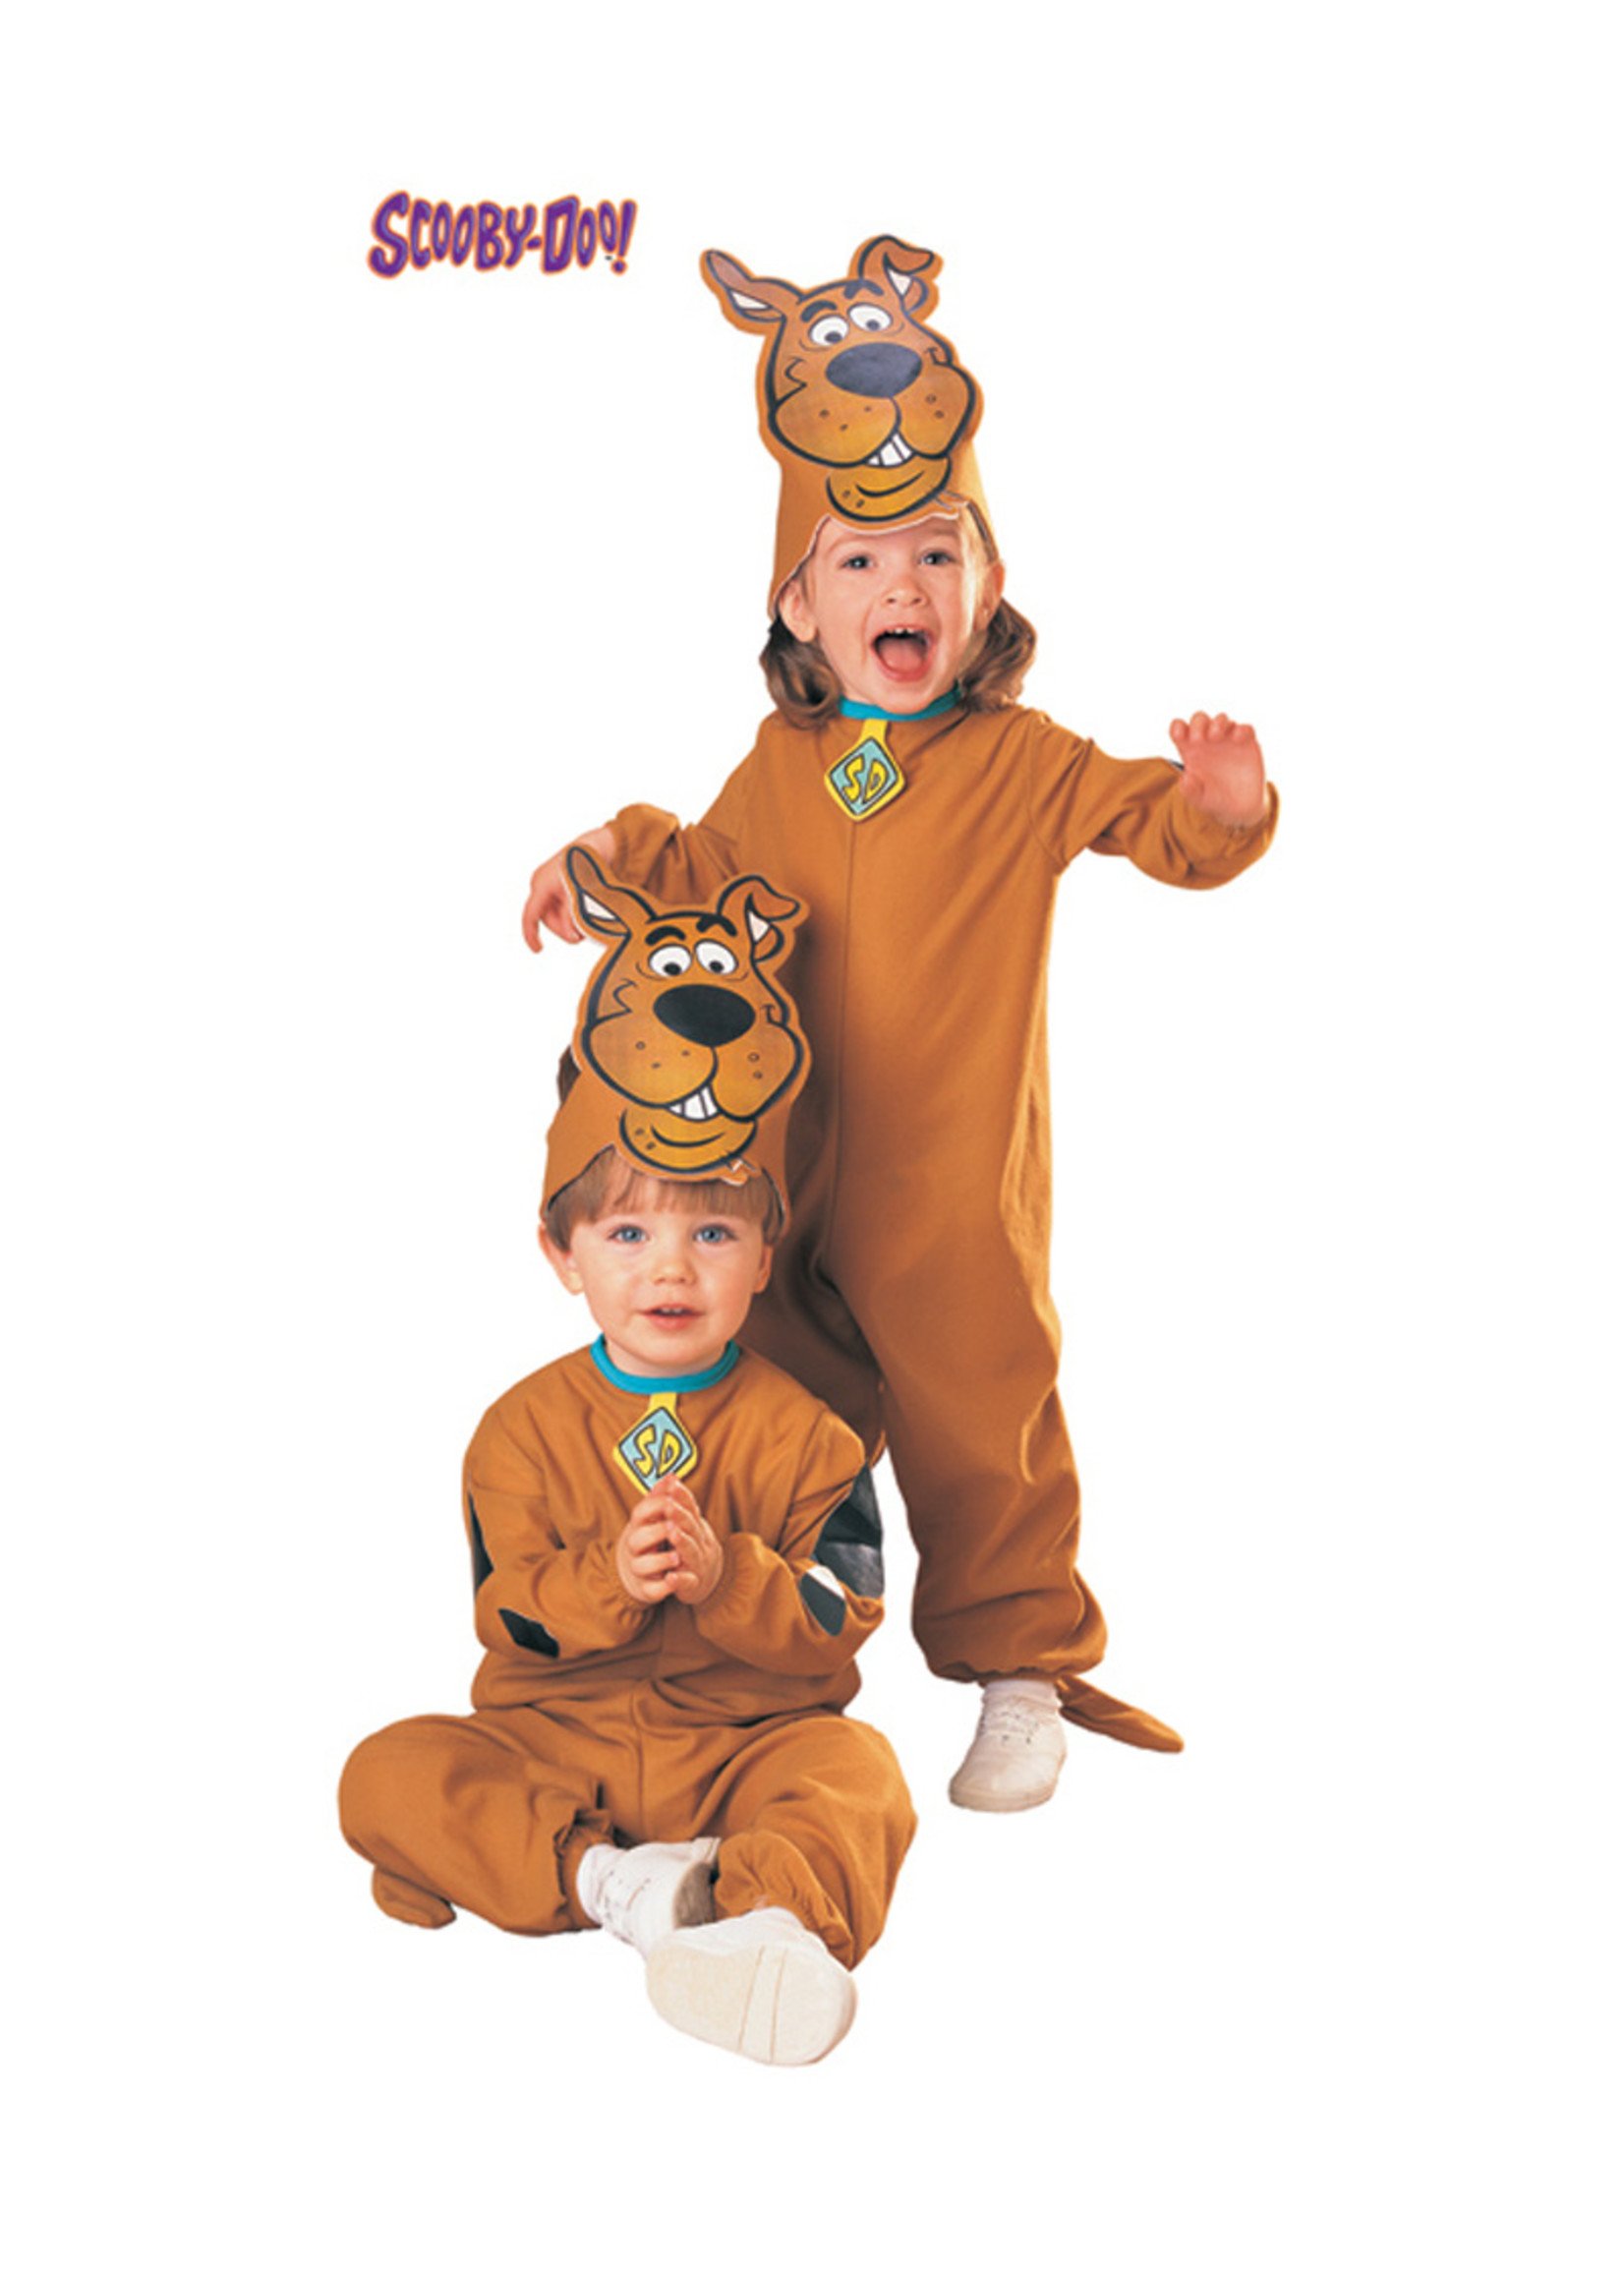 Scooby Doo Costume Toddler 